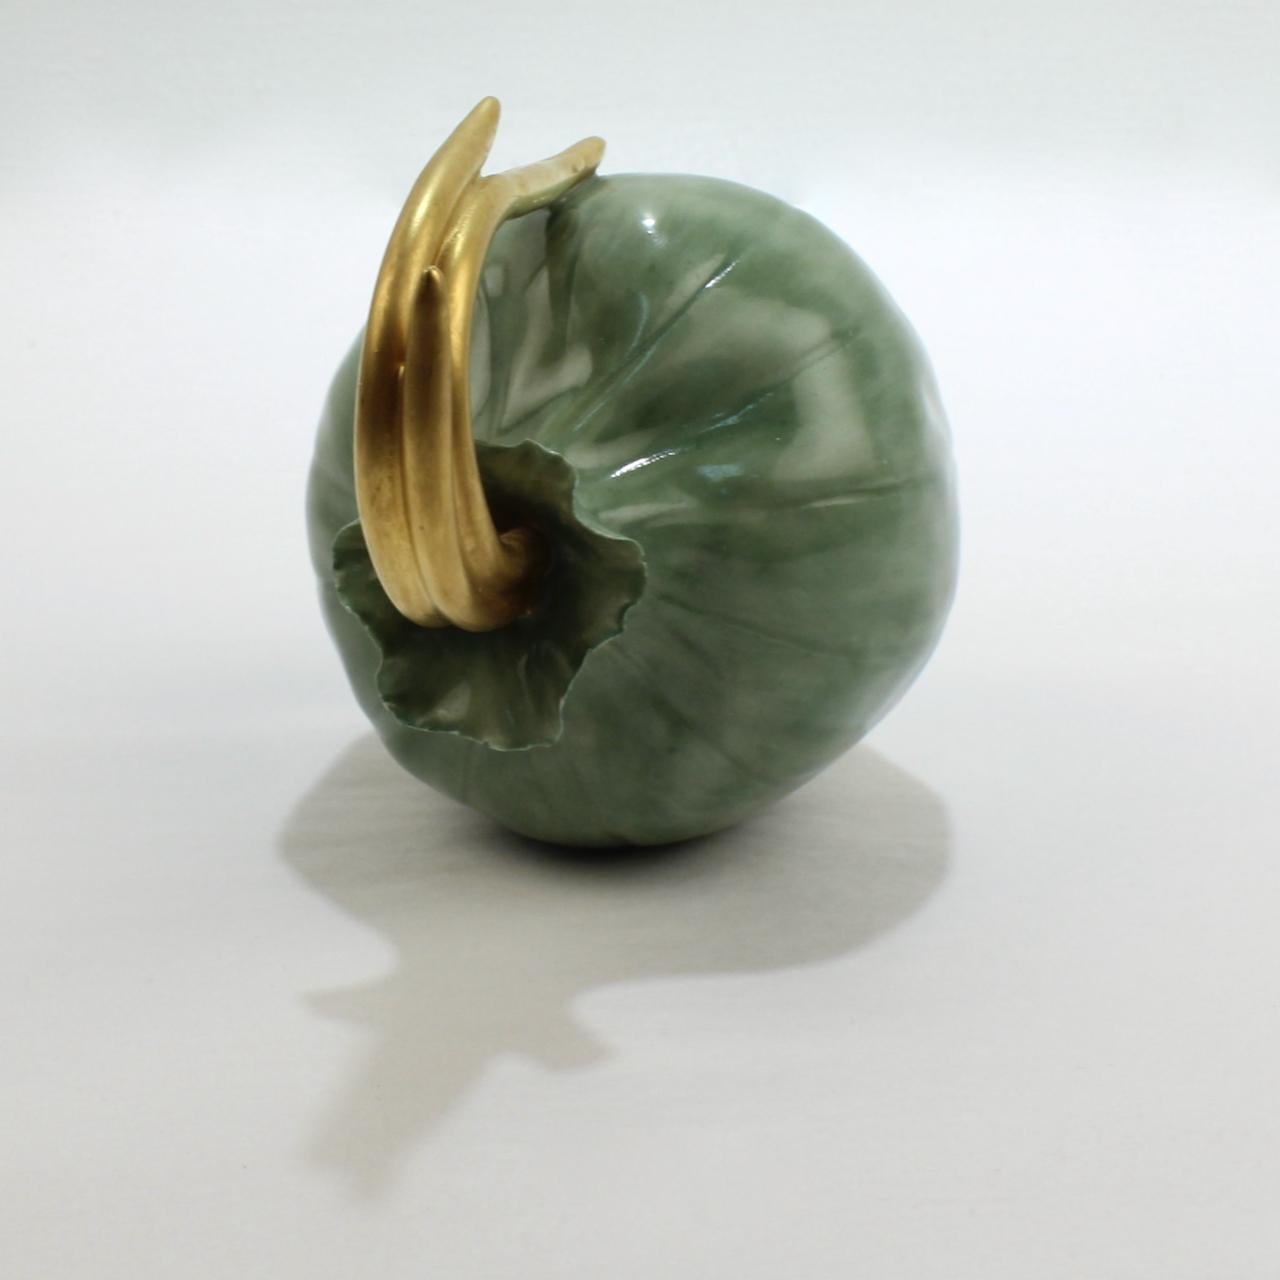 Katherine Houston Porcelain Figural Green Onion Model or Figurine 1